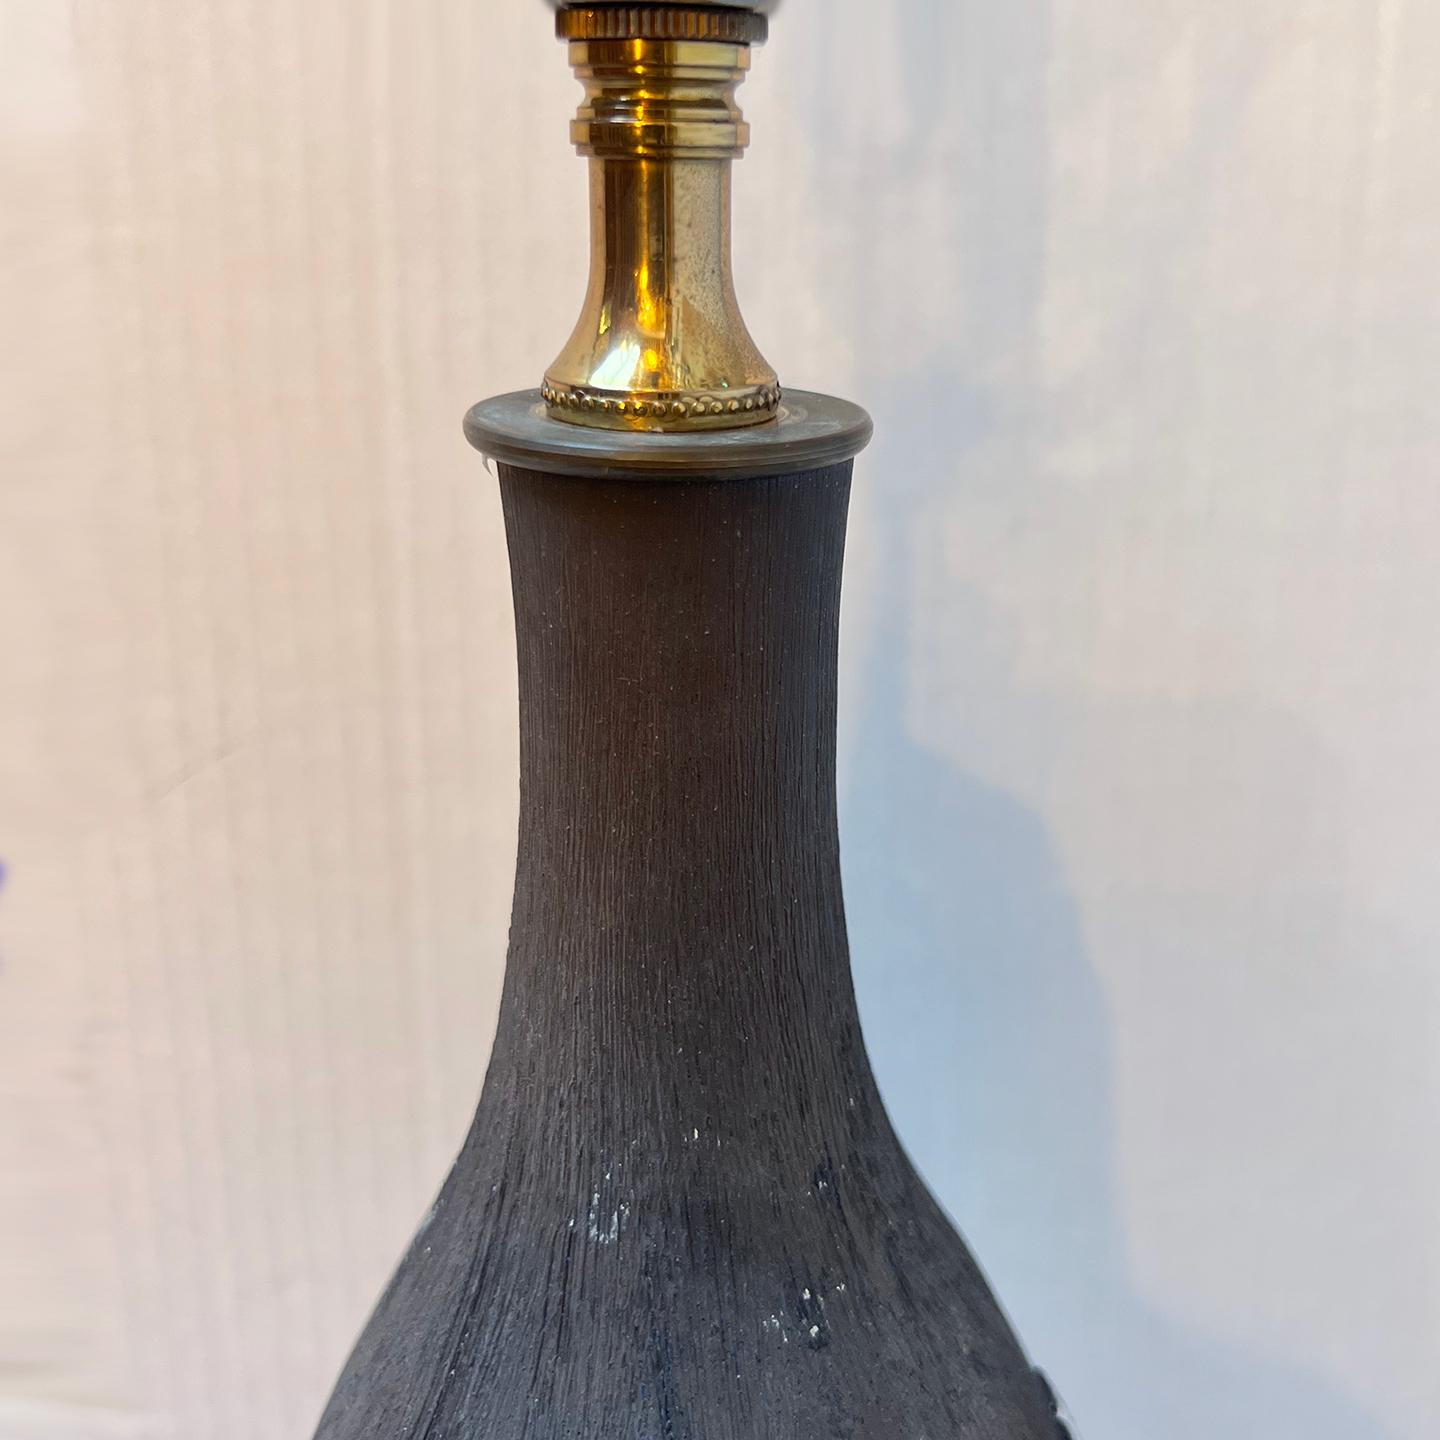 A circa 1960's Swedish ceramic lamp.

Measurements: 
Height of body: 15